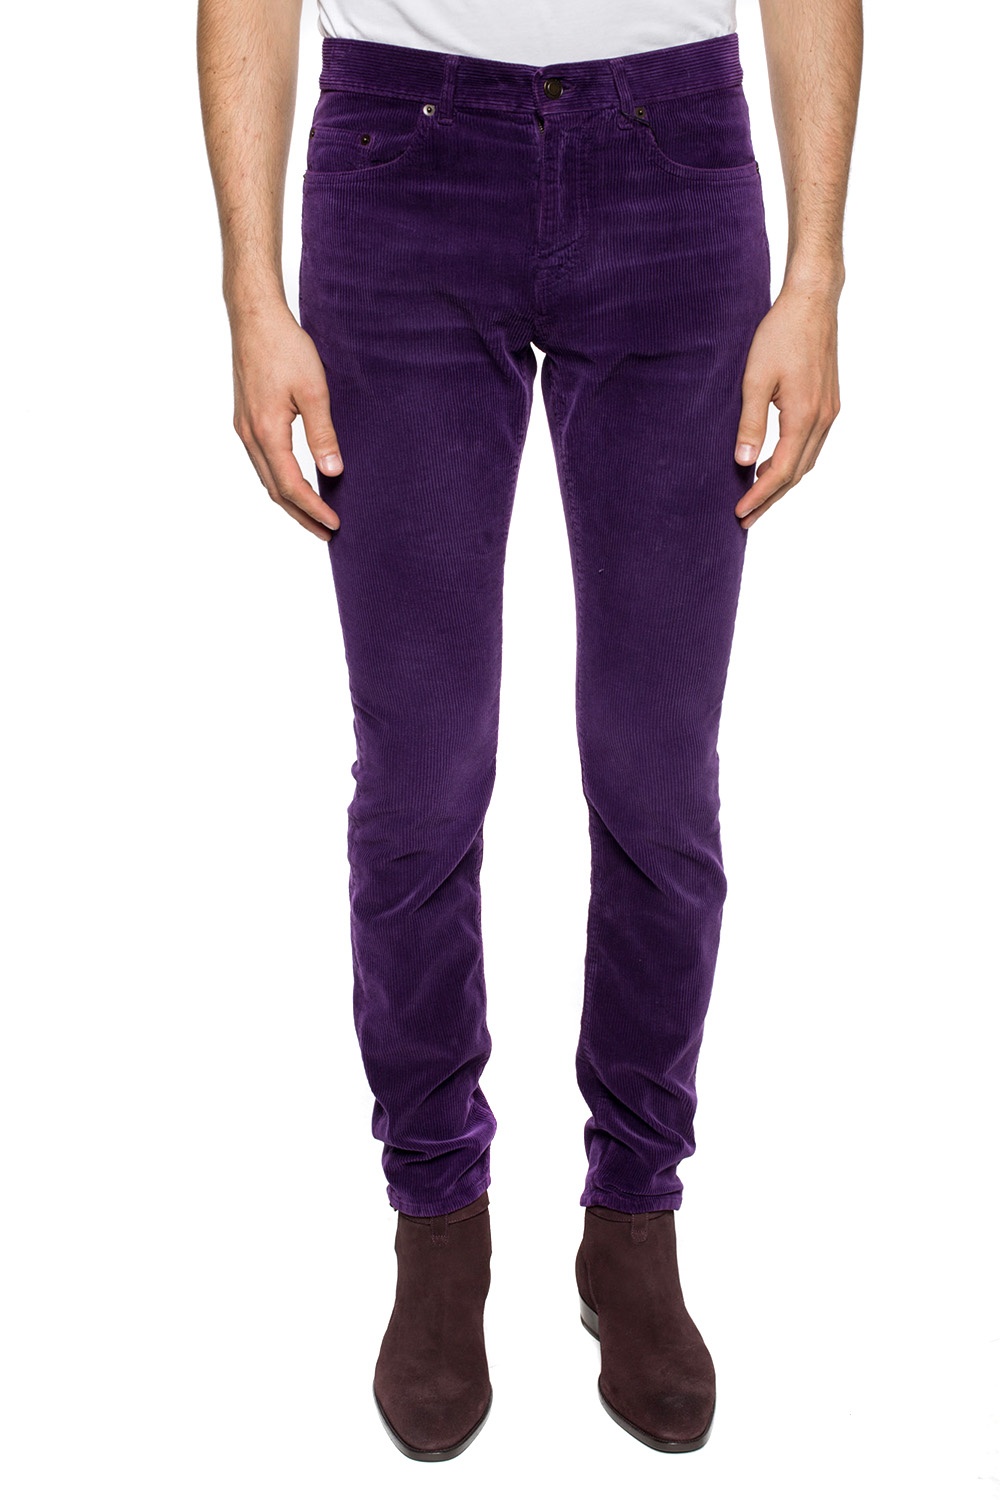 Billie Trousers ORGANIC CORDUROY  Ash Purple  Lucy  Yak